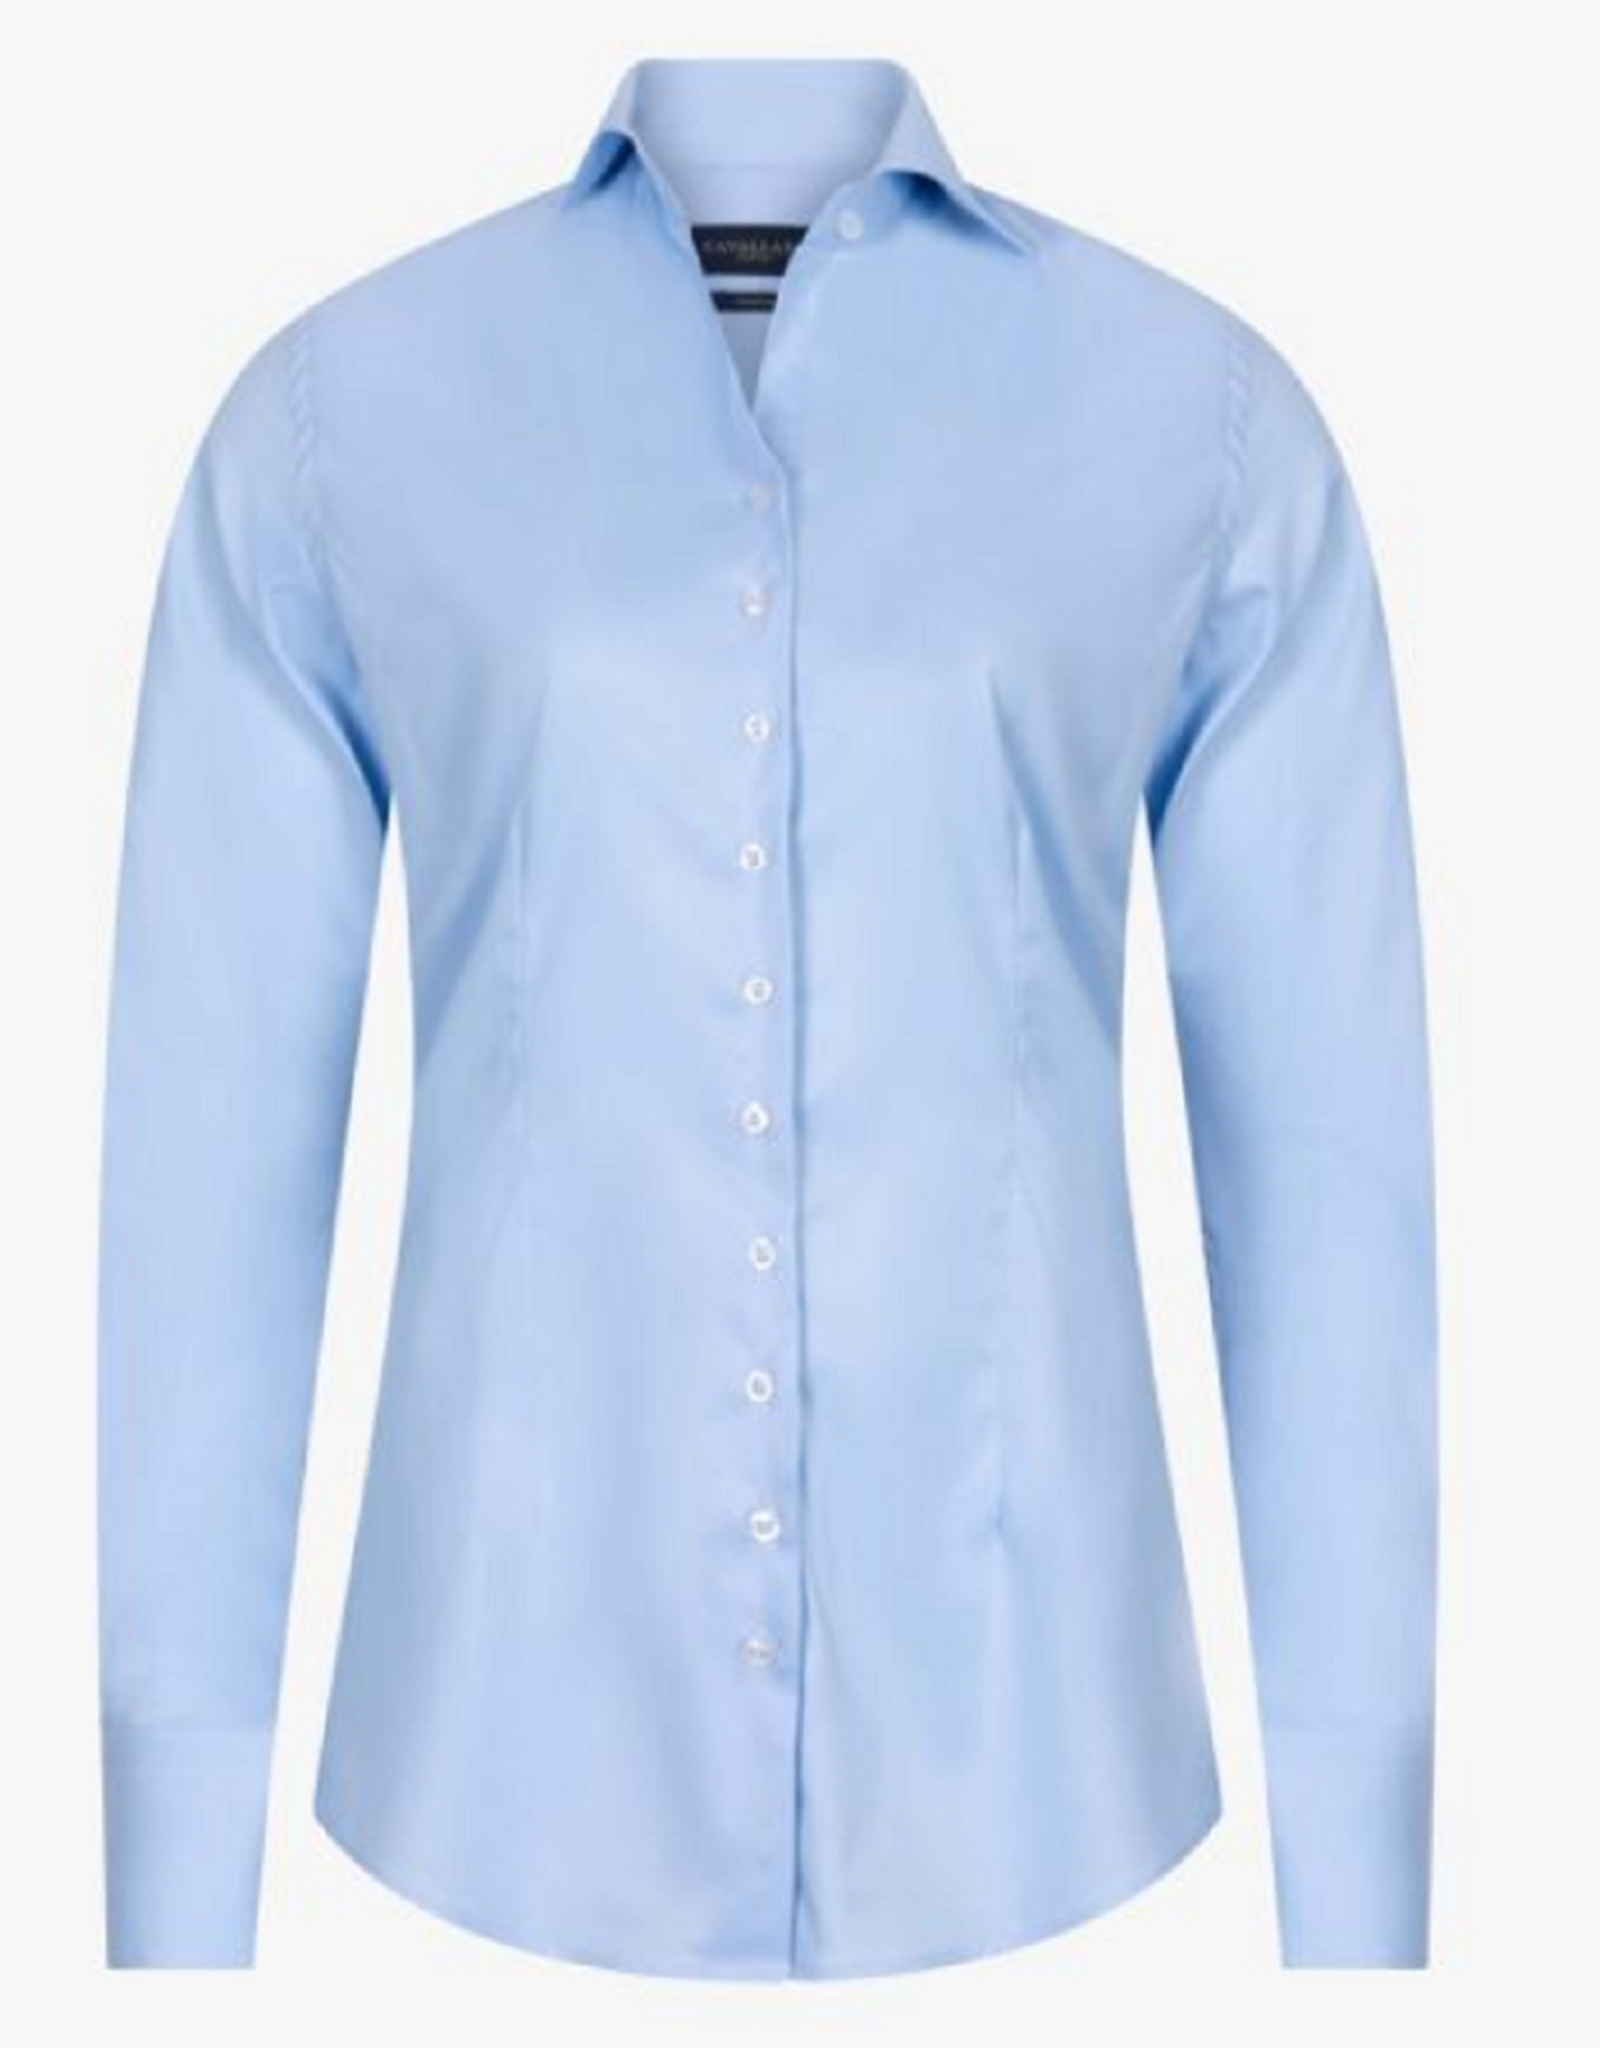 Cavallaro Cavallaro widespread blouse light blue